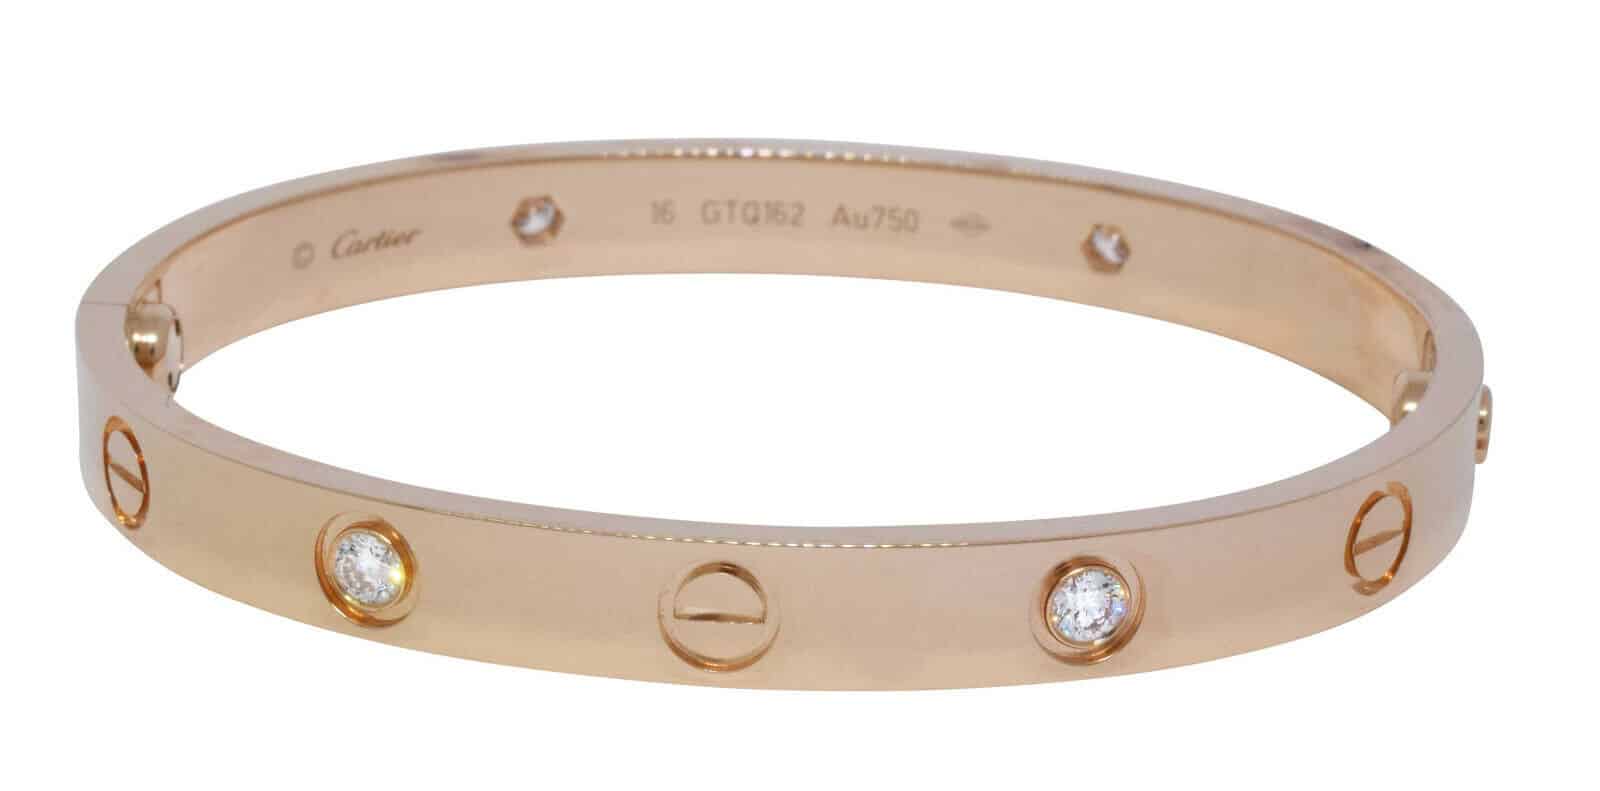 Buy Better Together Bracelet Online in India | Zariin